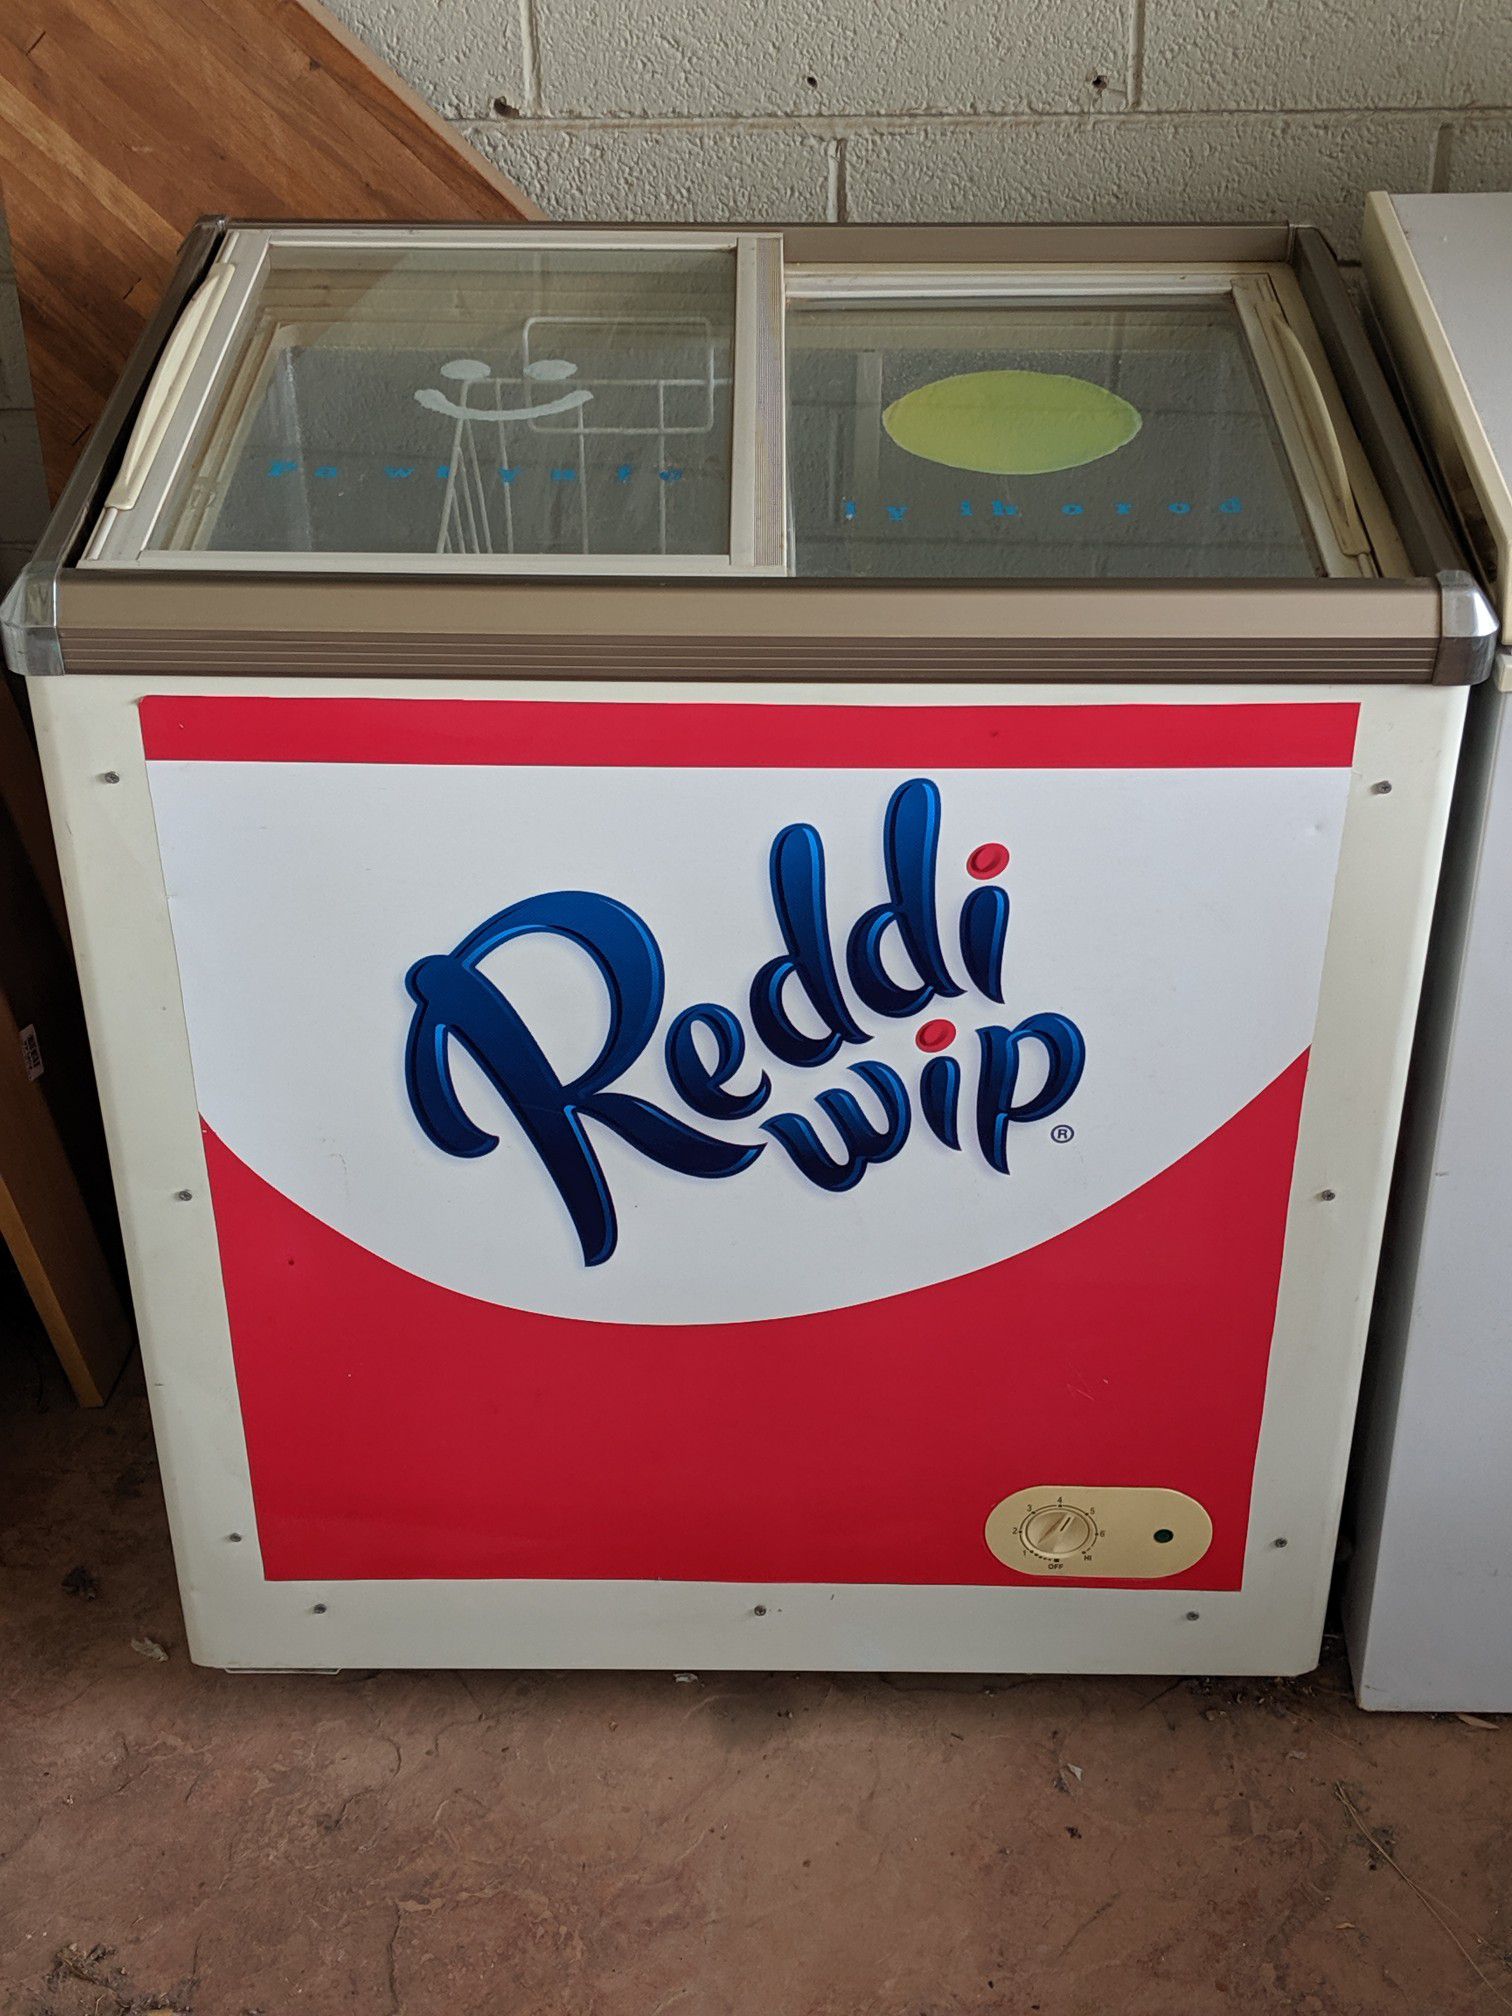 Free Reddi-wip Cooler/Refrigerator